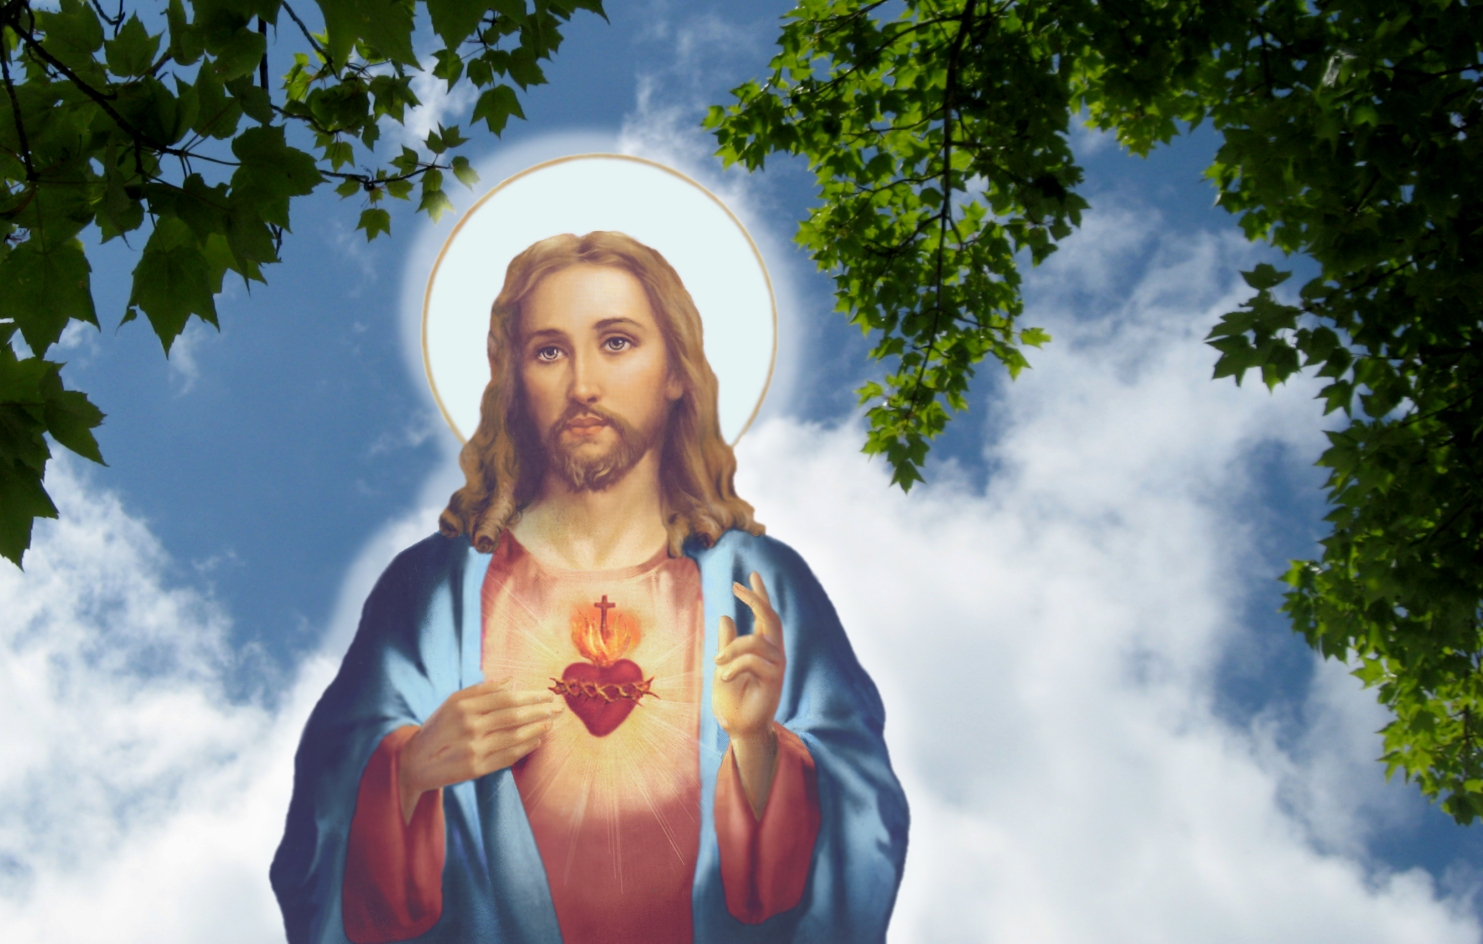 sacred heart of jesus by josecafeina